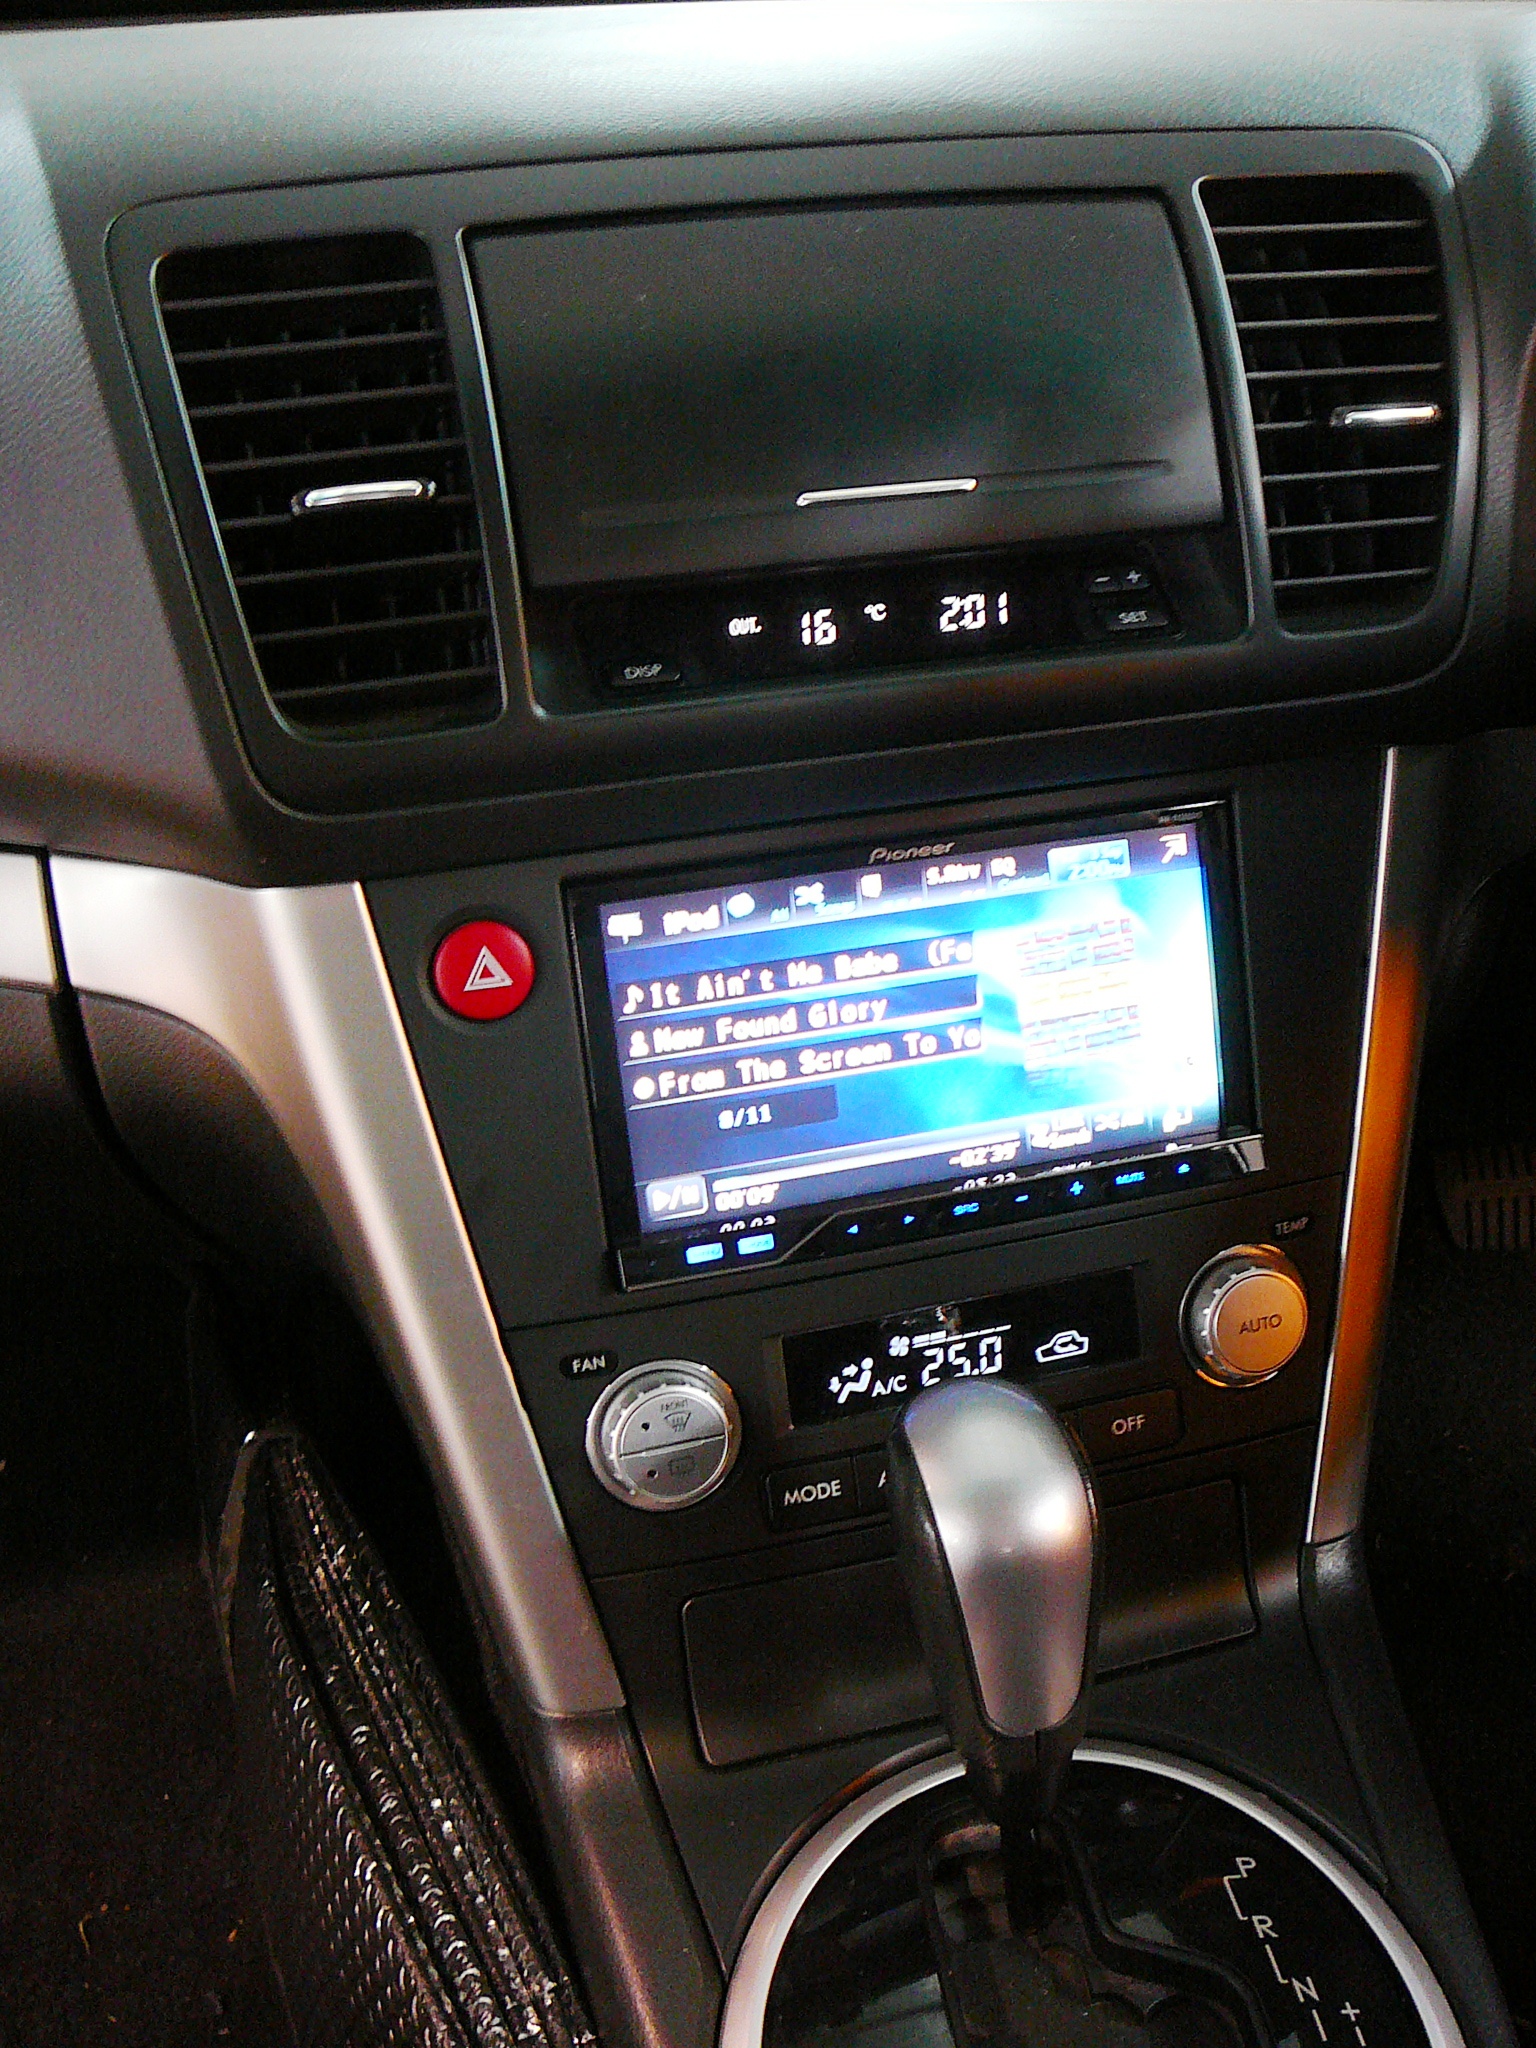 Subaru Liberty 2007, Pioneer GPS Navigation system